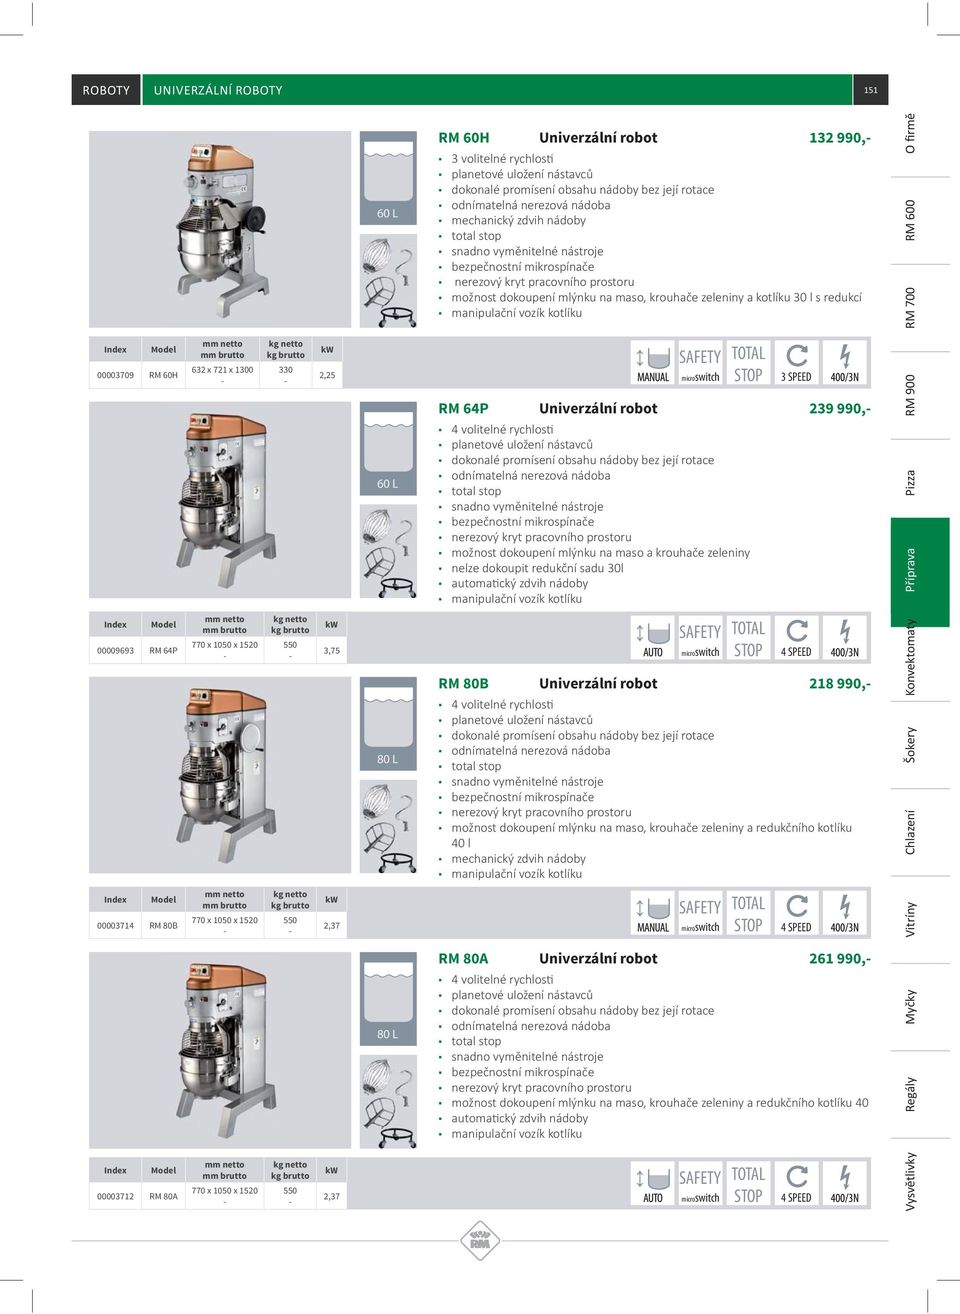 robot total stop SAFETY TOTAL STOP 3,75 microswitch 4 SPEED 80 L RM 80B Univerzální robot total stop 40 l SAFETY TOTAL STOP 2,37